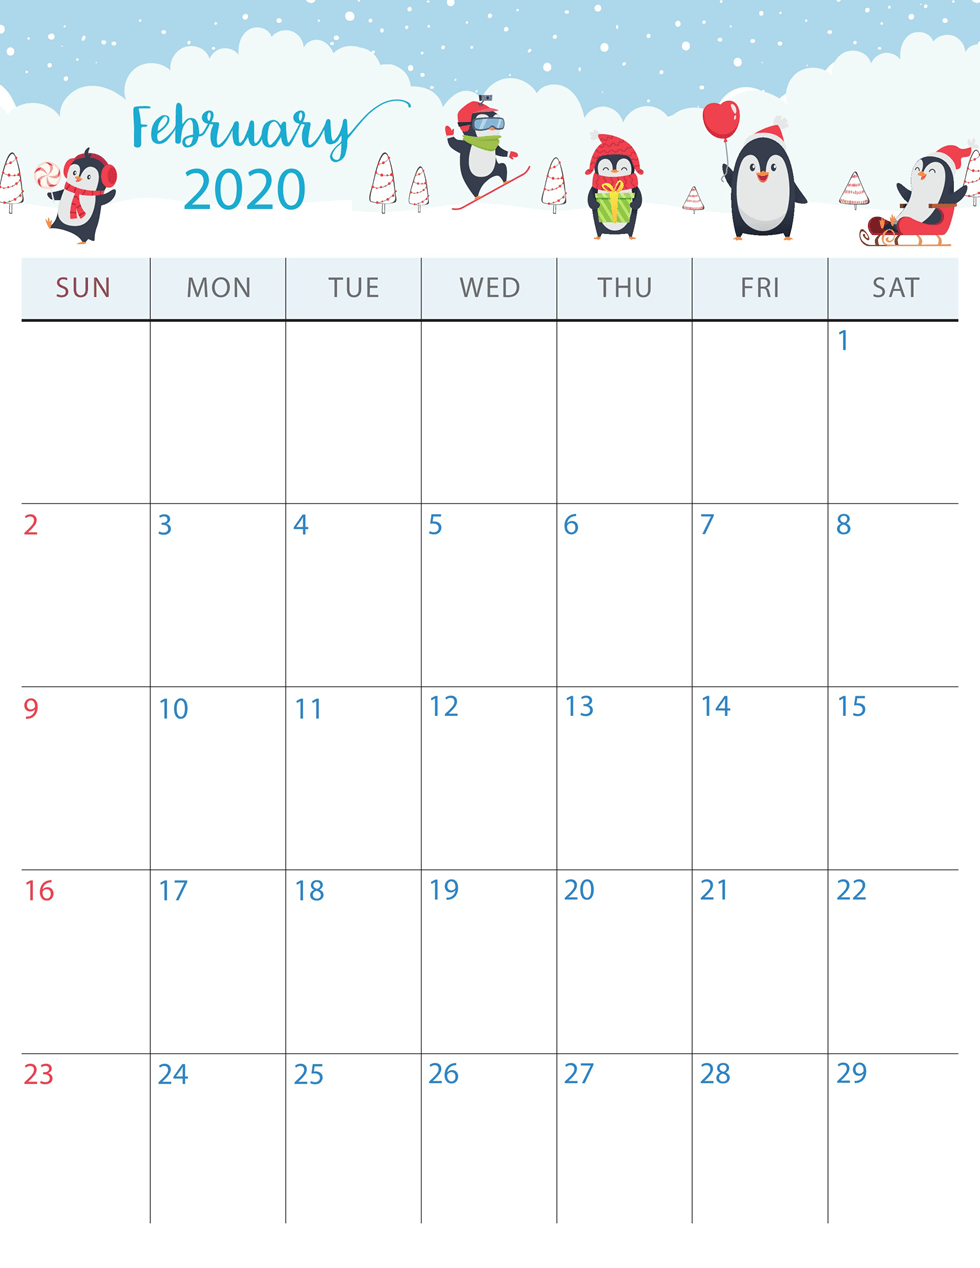 February 2020 Printable Calendar - Download Free Printables